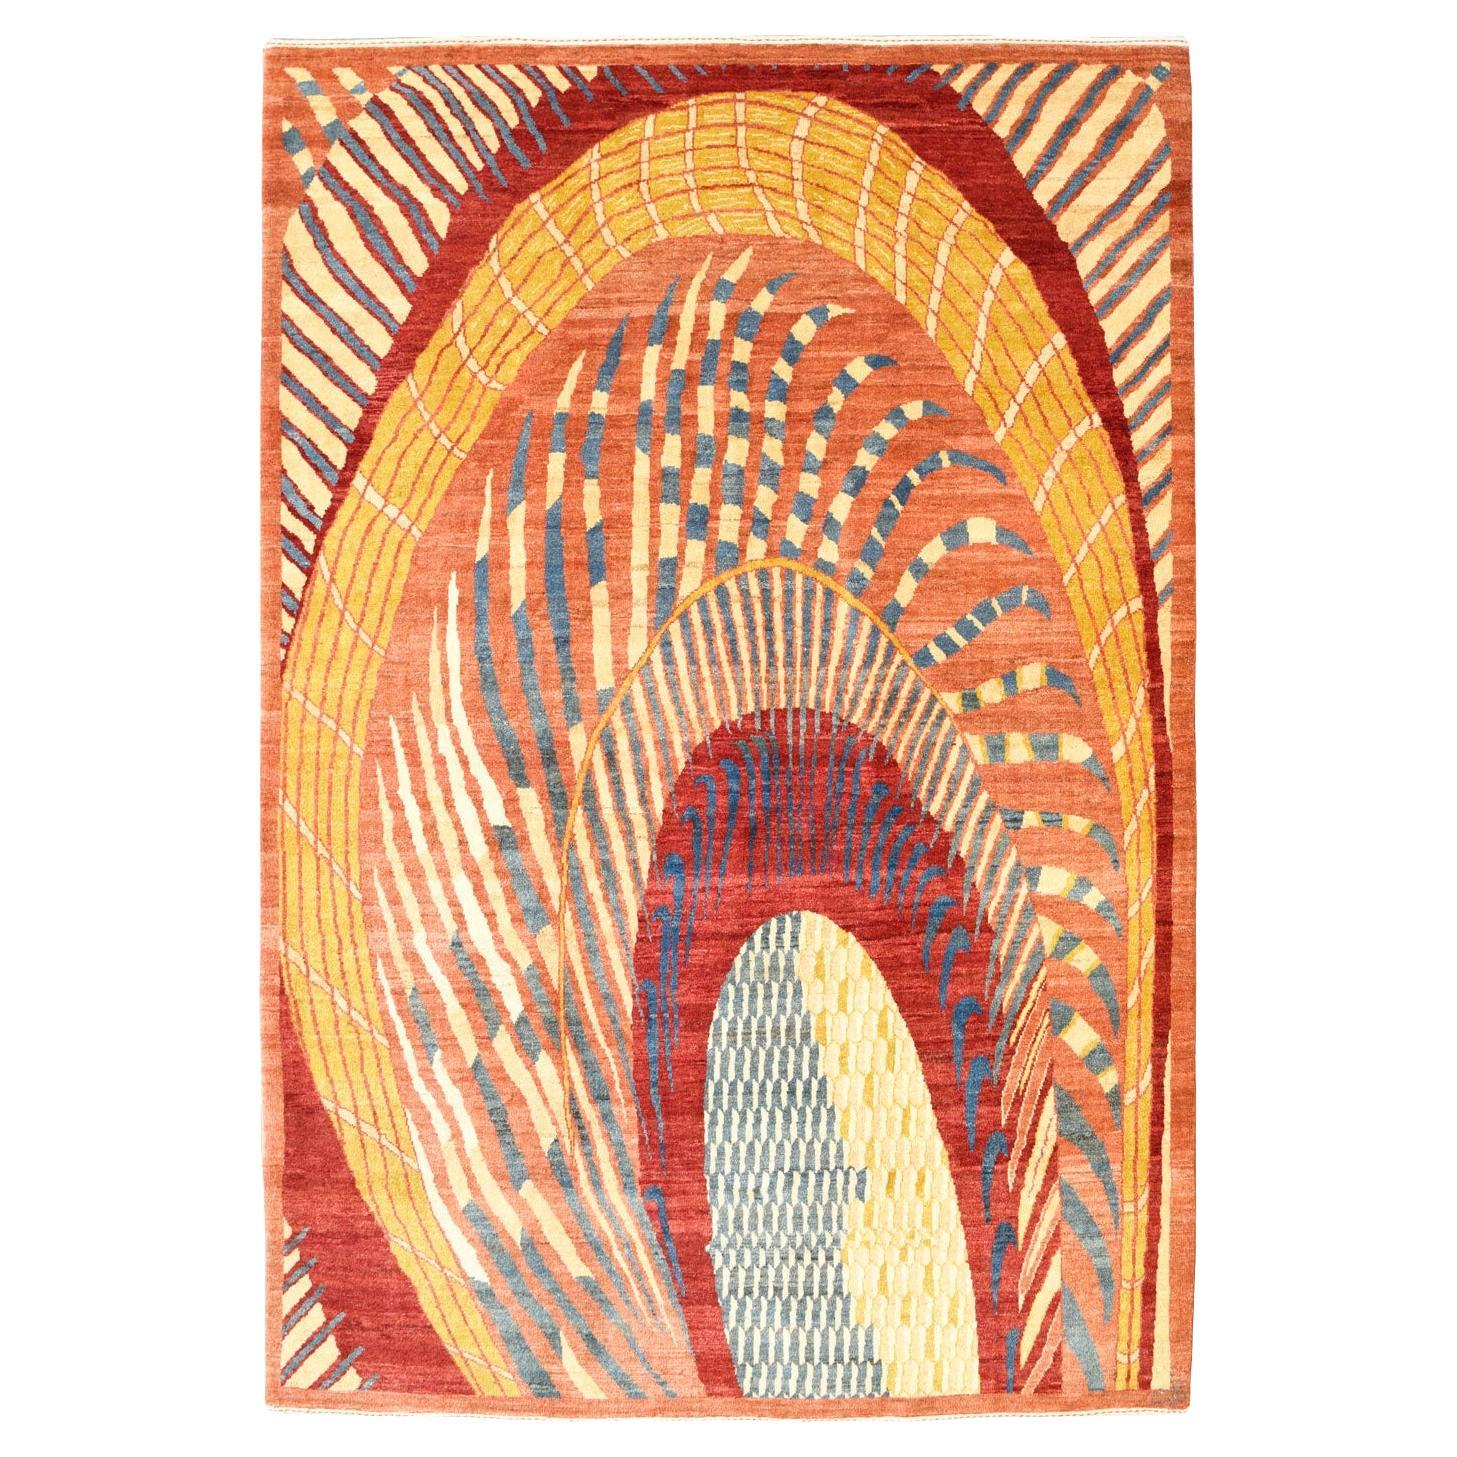 Roter und goldener Orley Shabahang „Heart of the Flame“ Moderner persischer Teppich, 5' x 7' im Angebot